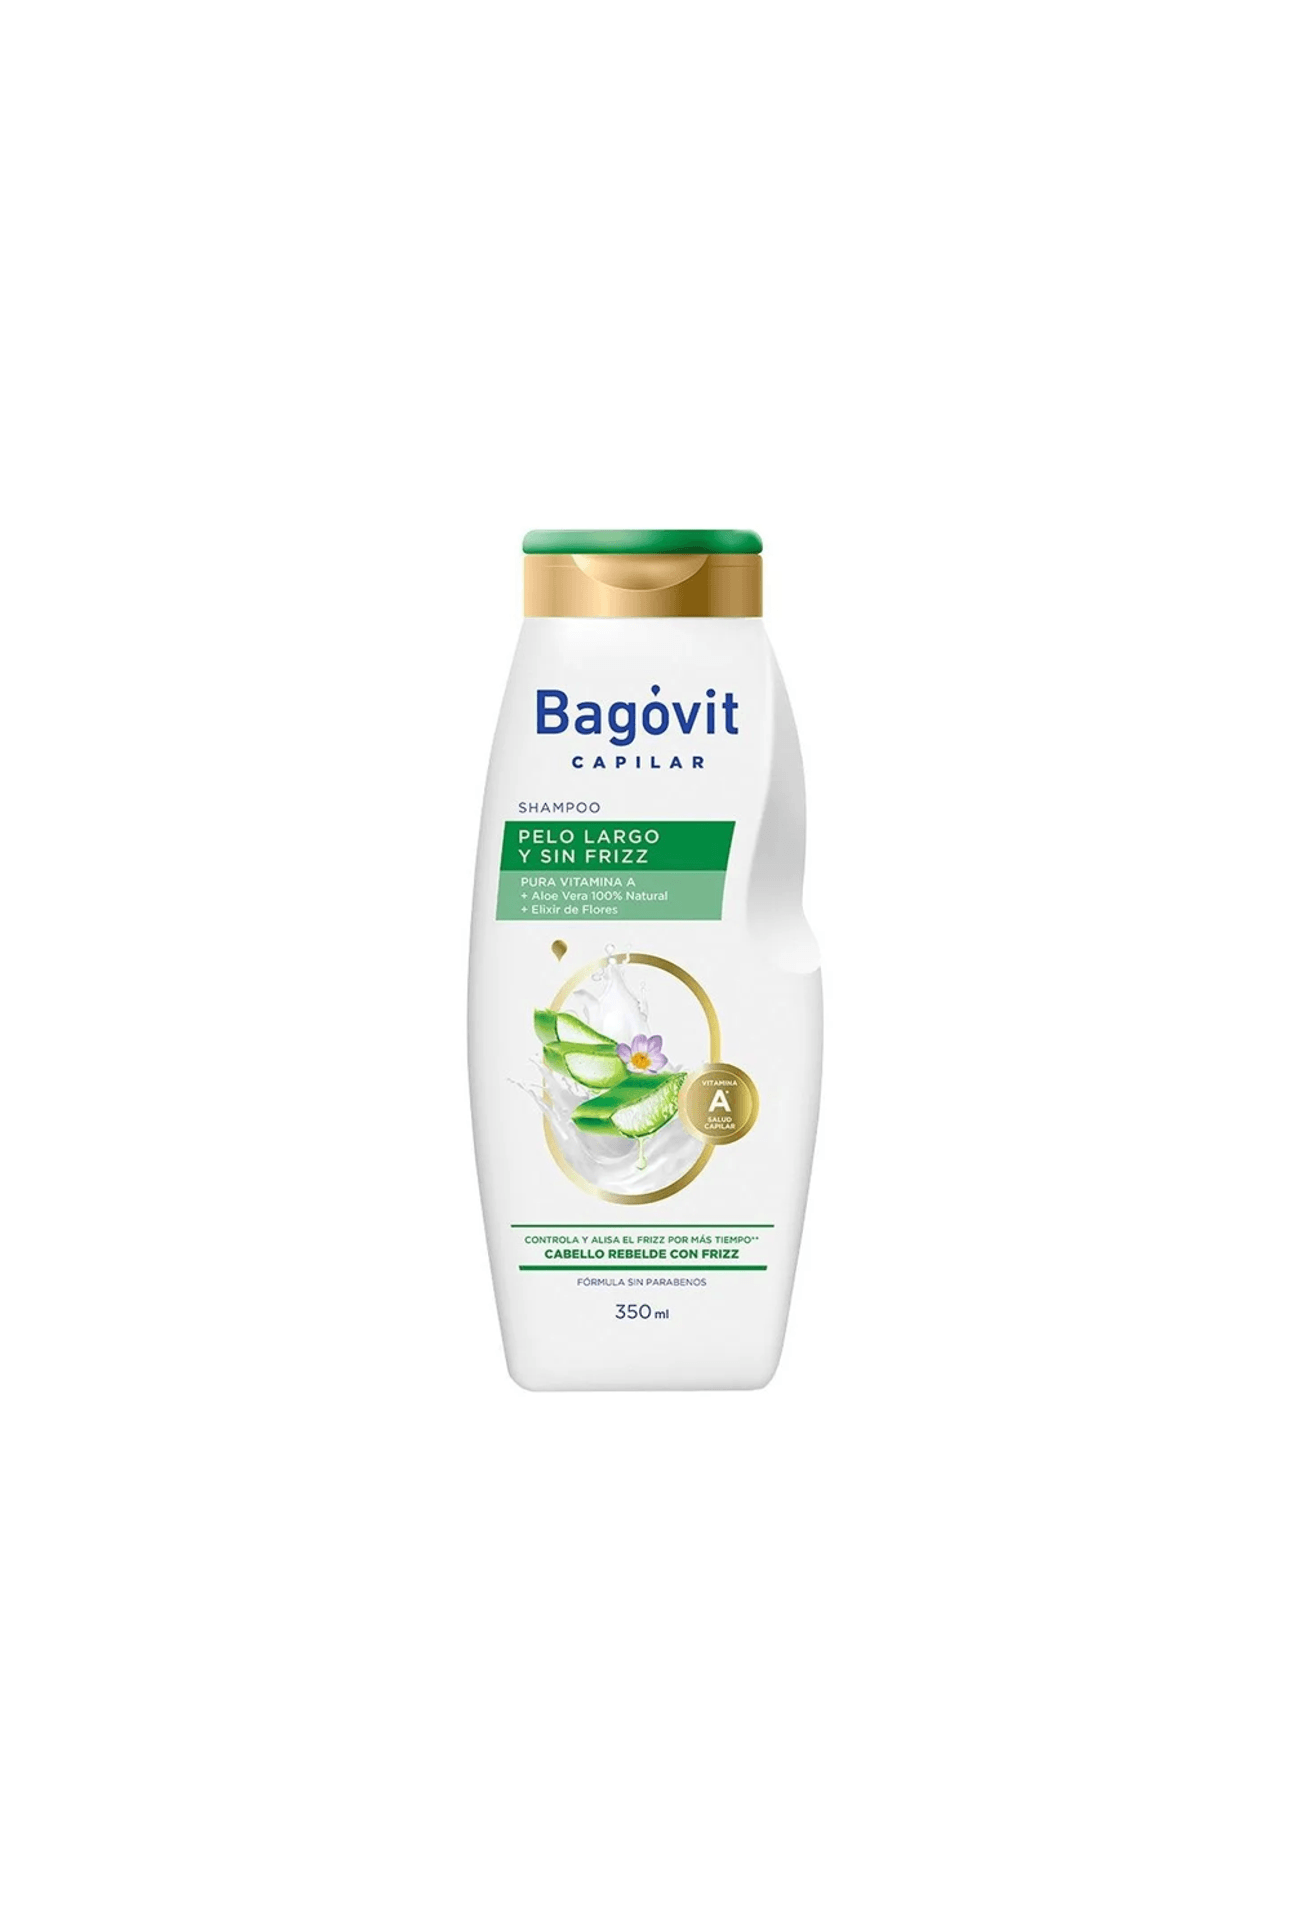 Bagovit-Shampoo-Bagovit-Capilar-Pelo-Largo-y-Sin-Frizz-x-350ml-7790375269692_img1